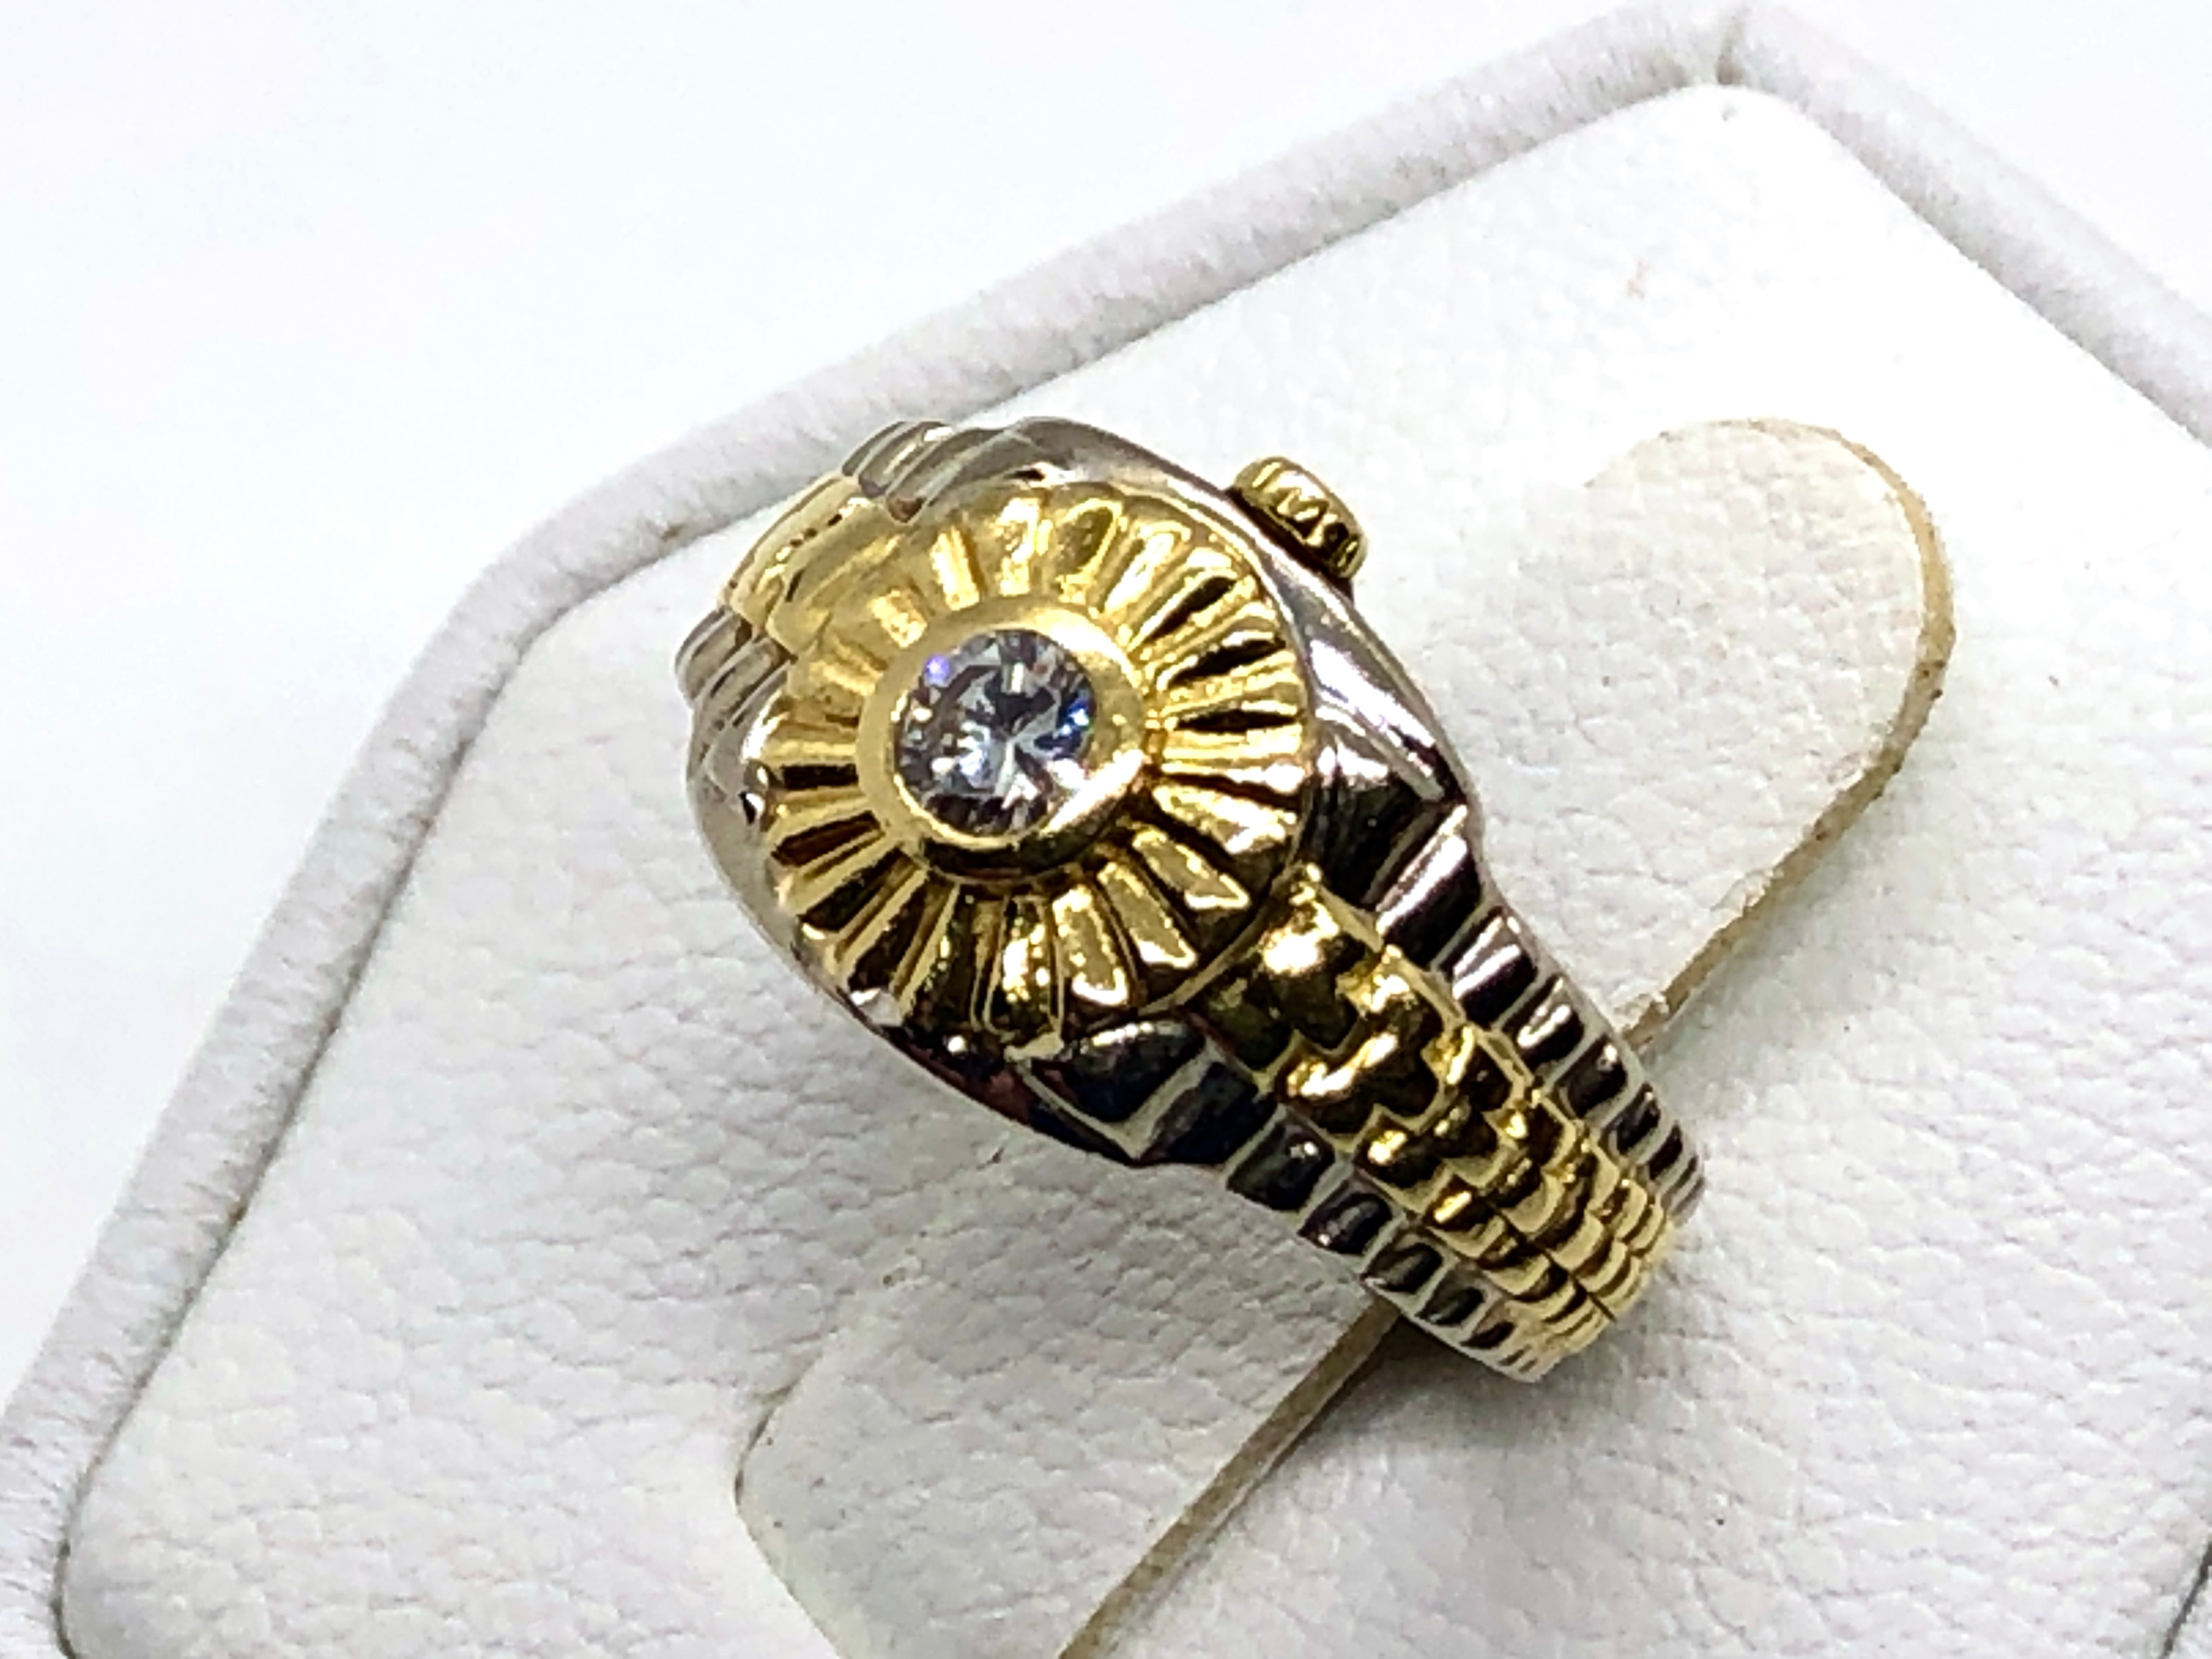 Making Rolex Ring 24k gold - YouTube